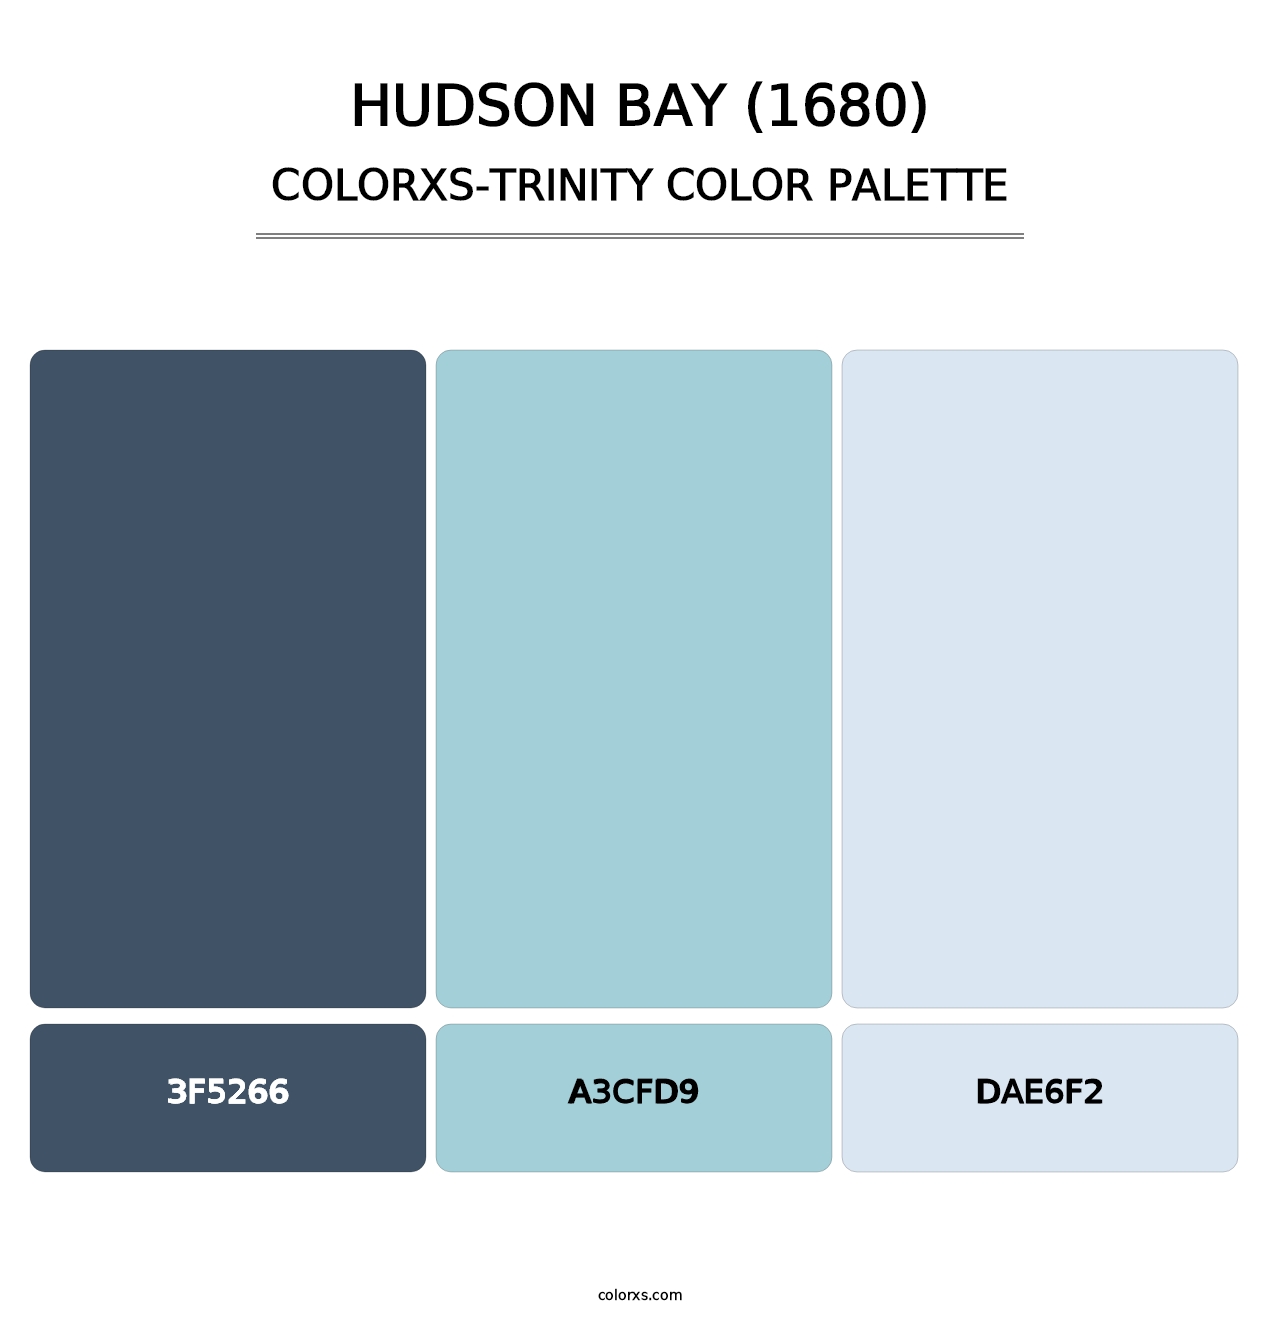 Hudson Bay (1680) - Colorxs Trinity Palette